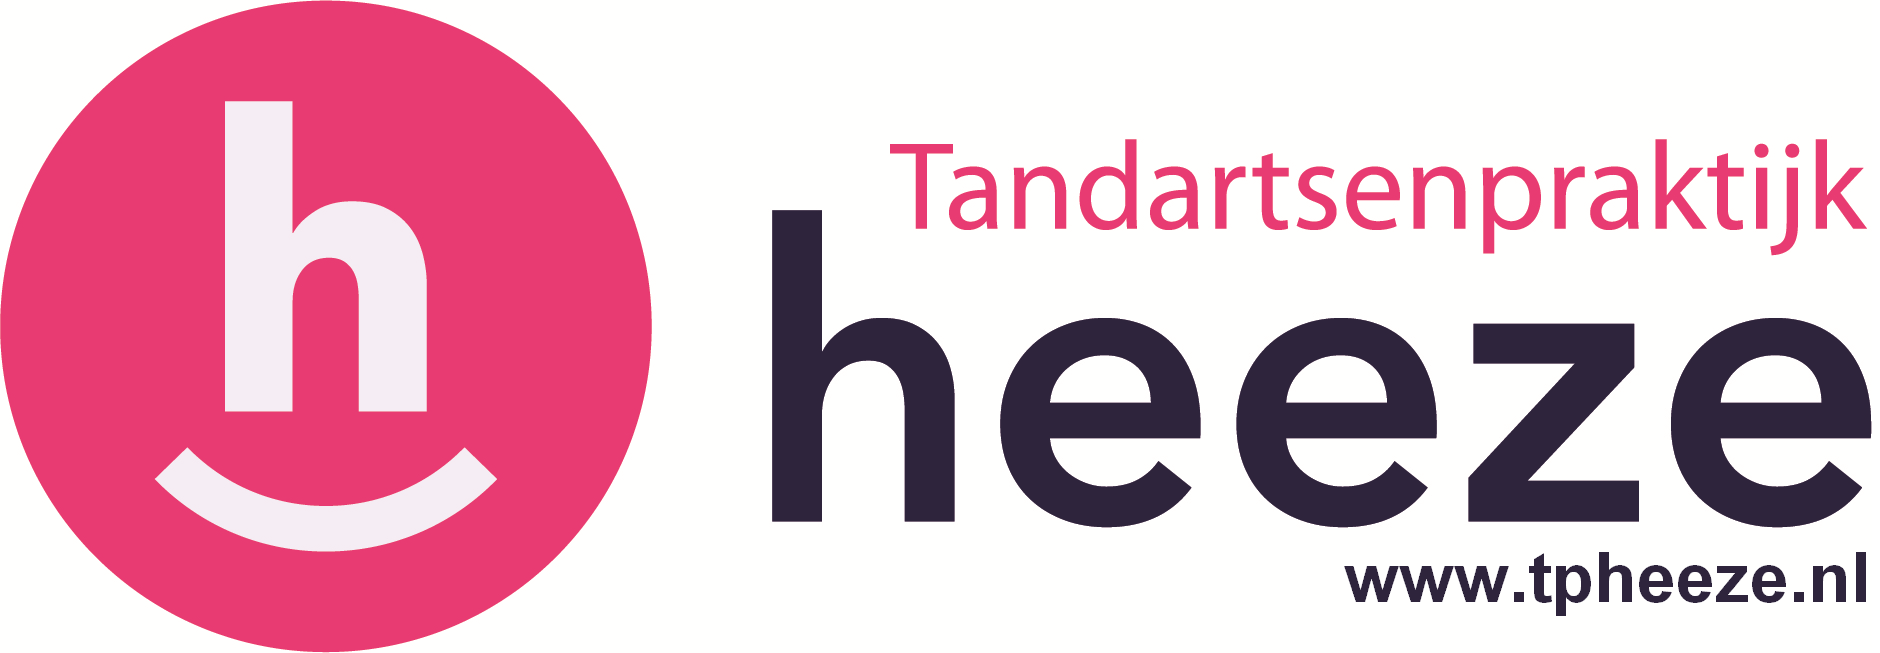 Tandartspraktijk Heeze logo